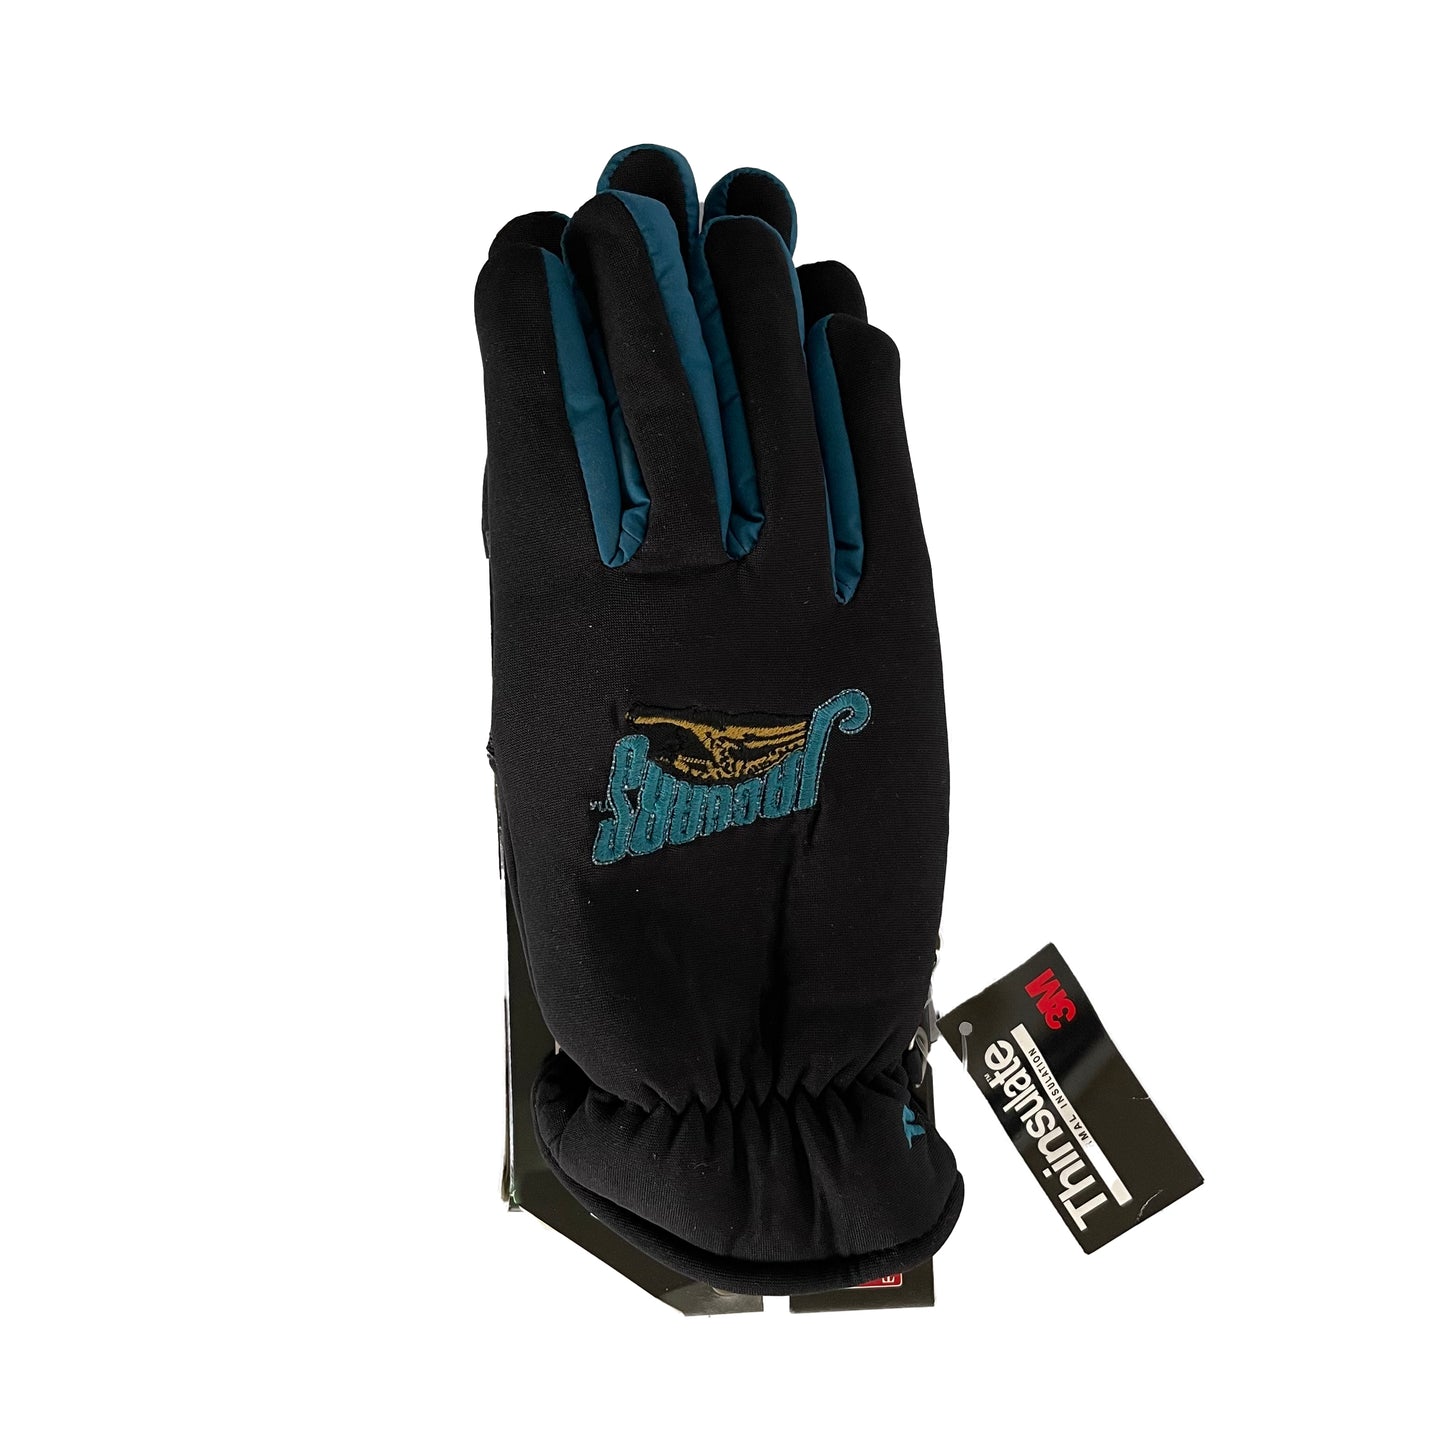 Jacksonville Jaguars banned logo gloves